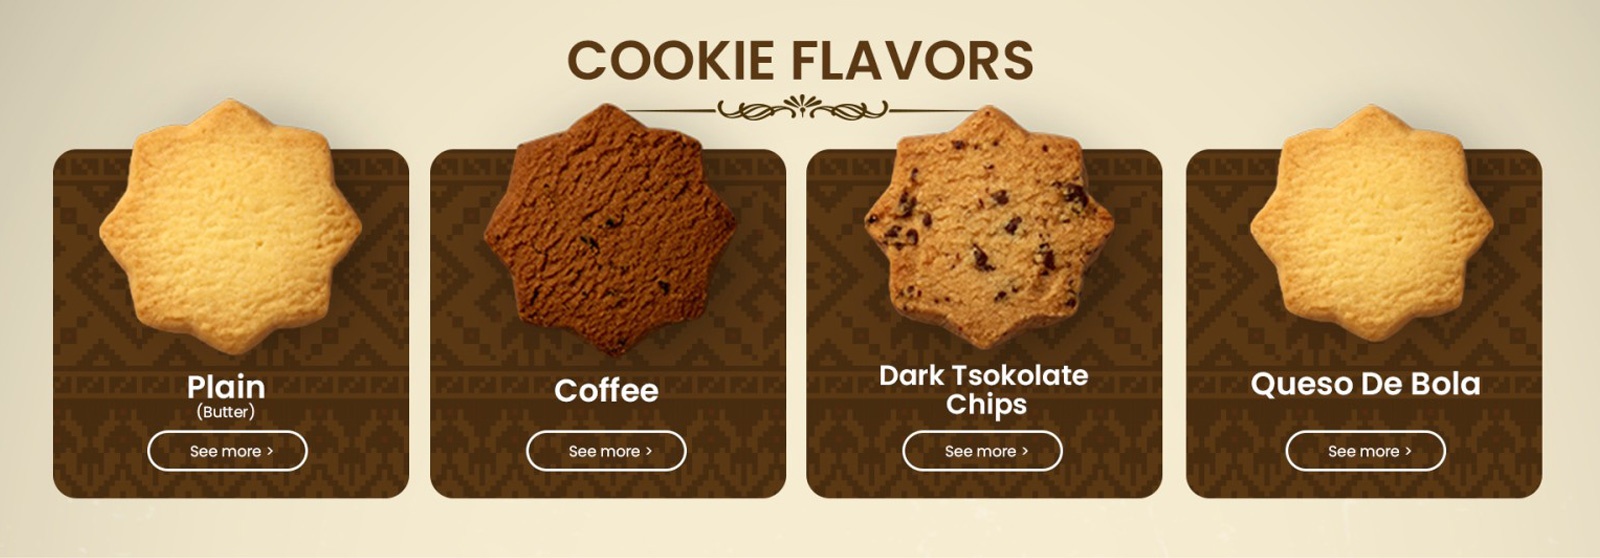 Cookie Flavors